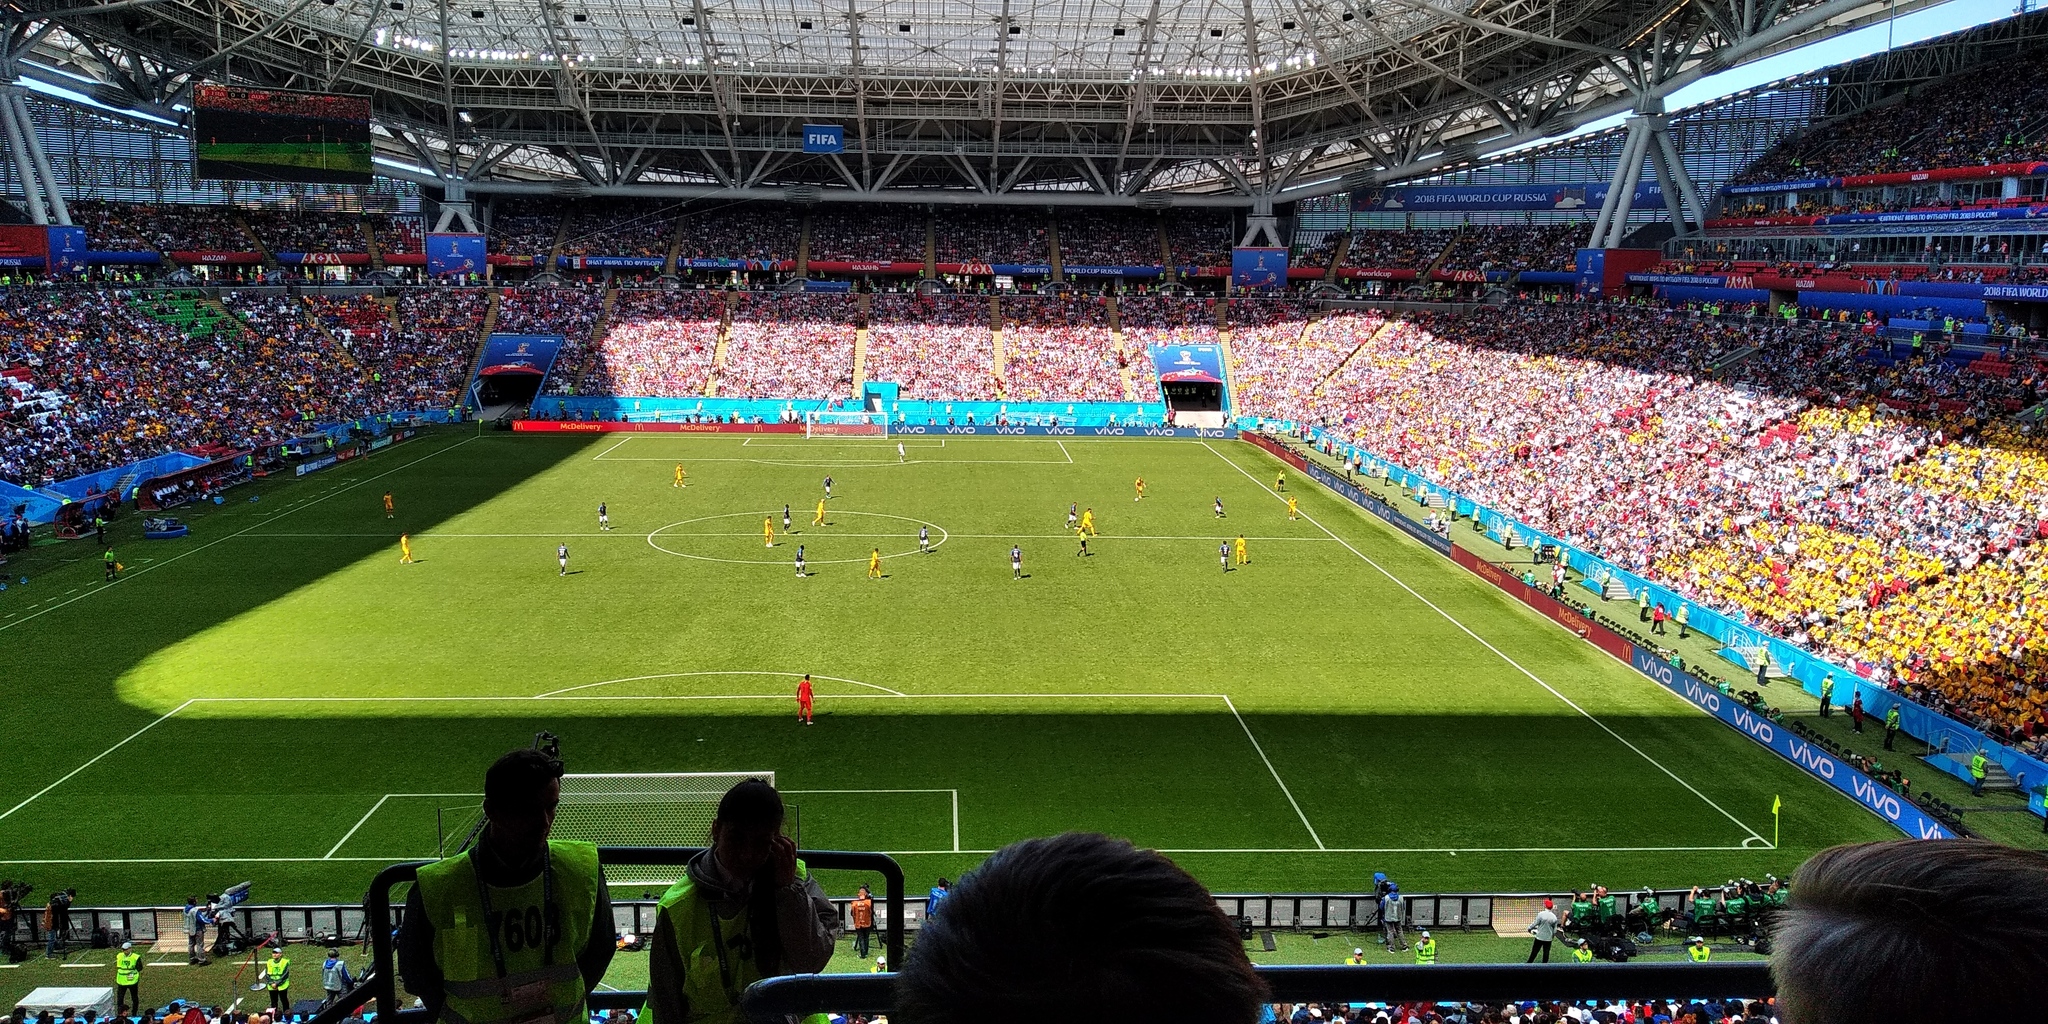 How I went to the 2018 FIFA World Cup match - My, 2018 FIFA World Cup, Football, France, Australia, Kazan, Kazan Arena, Longpost